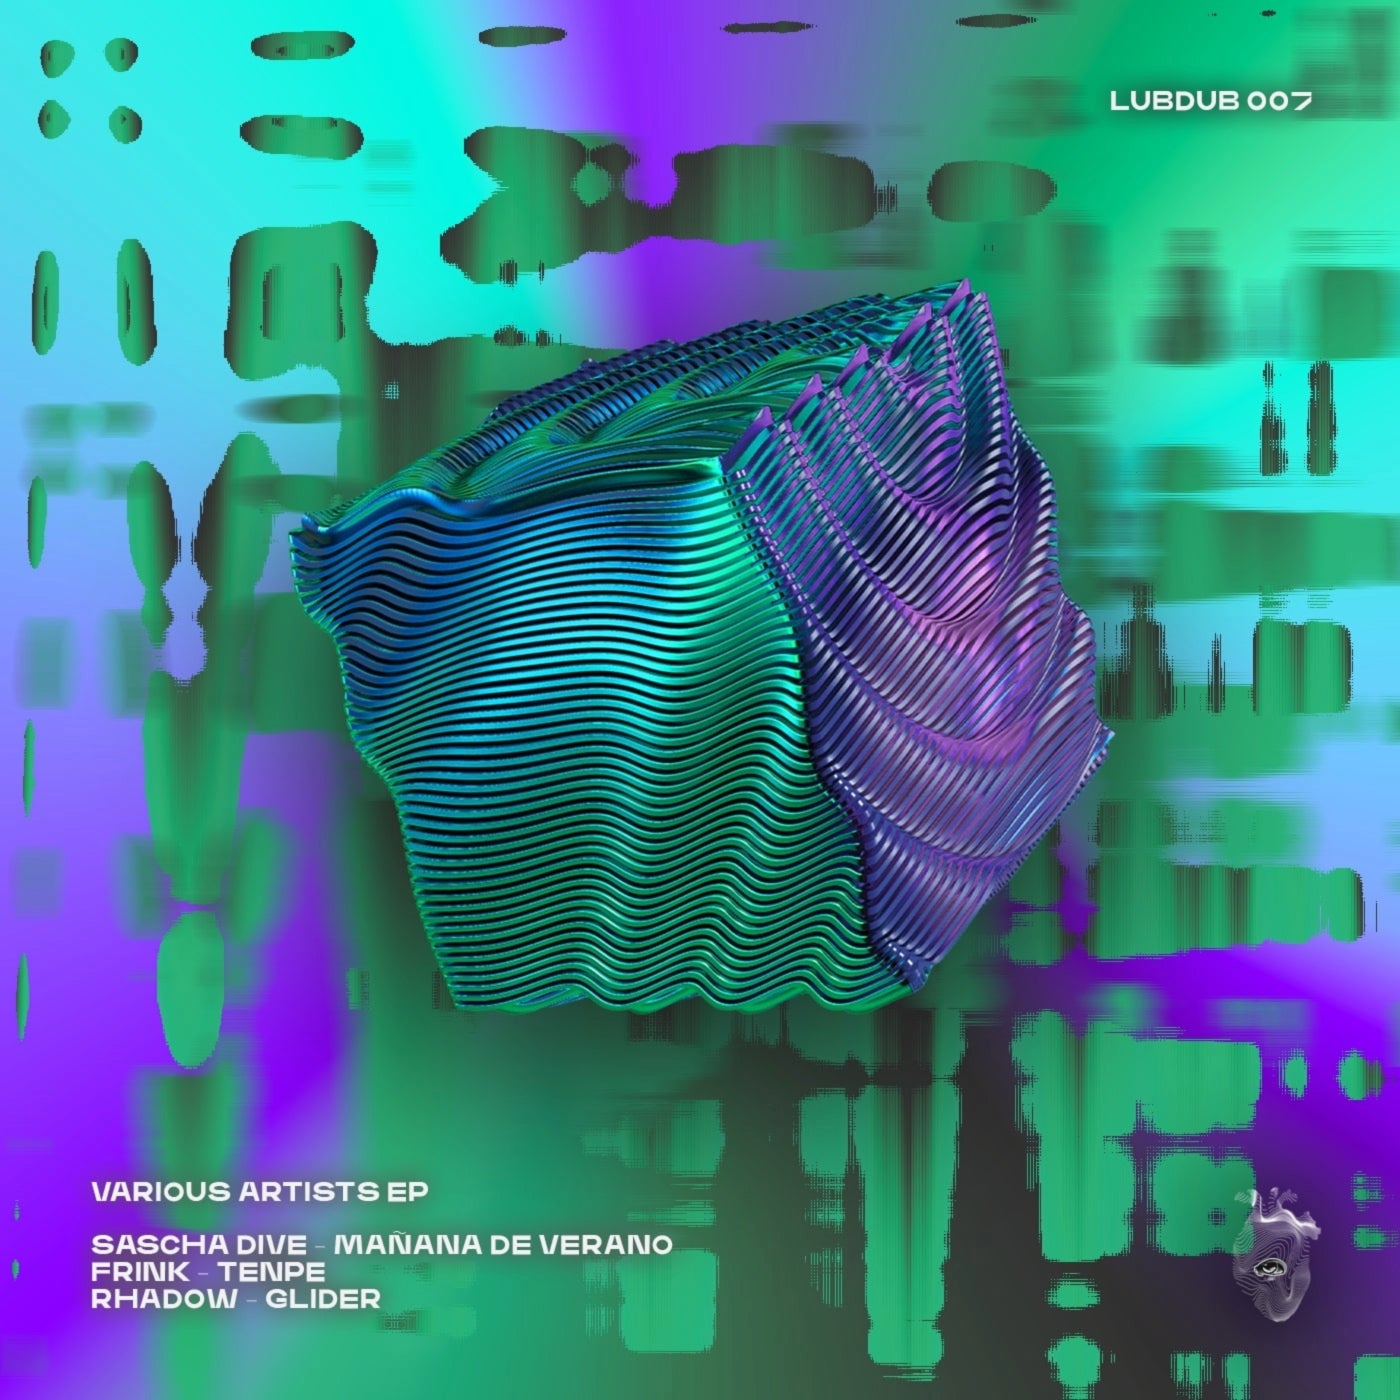 image cover: VA - Various Artists II on Lubdub Records